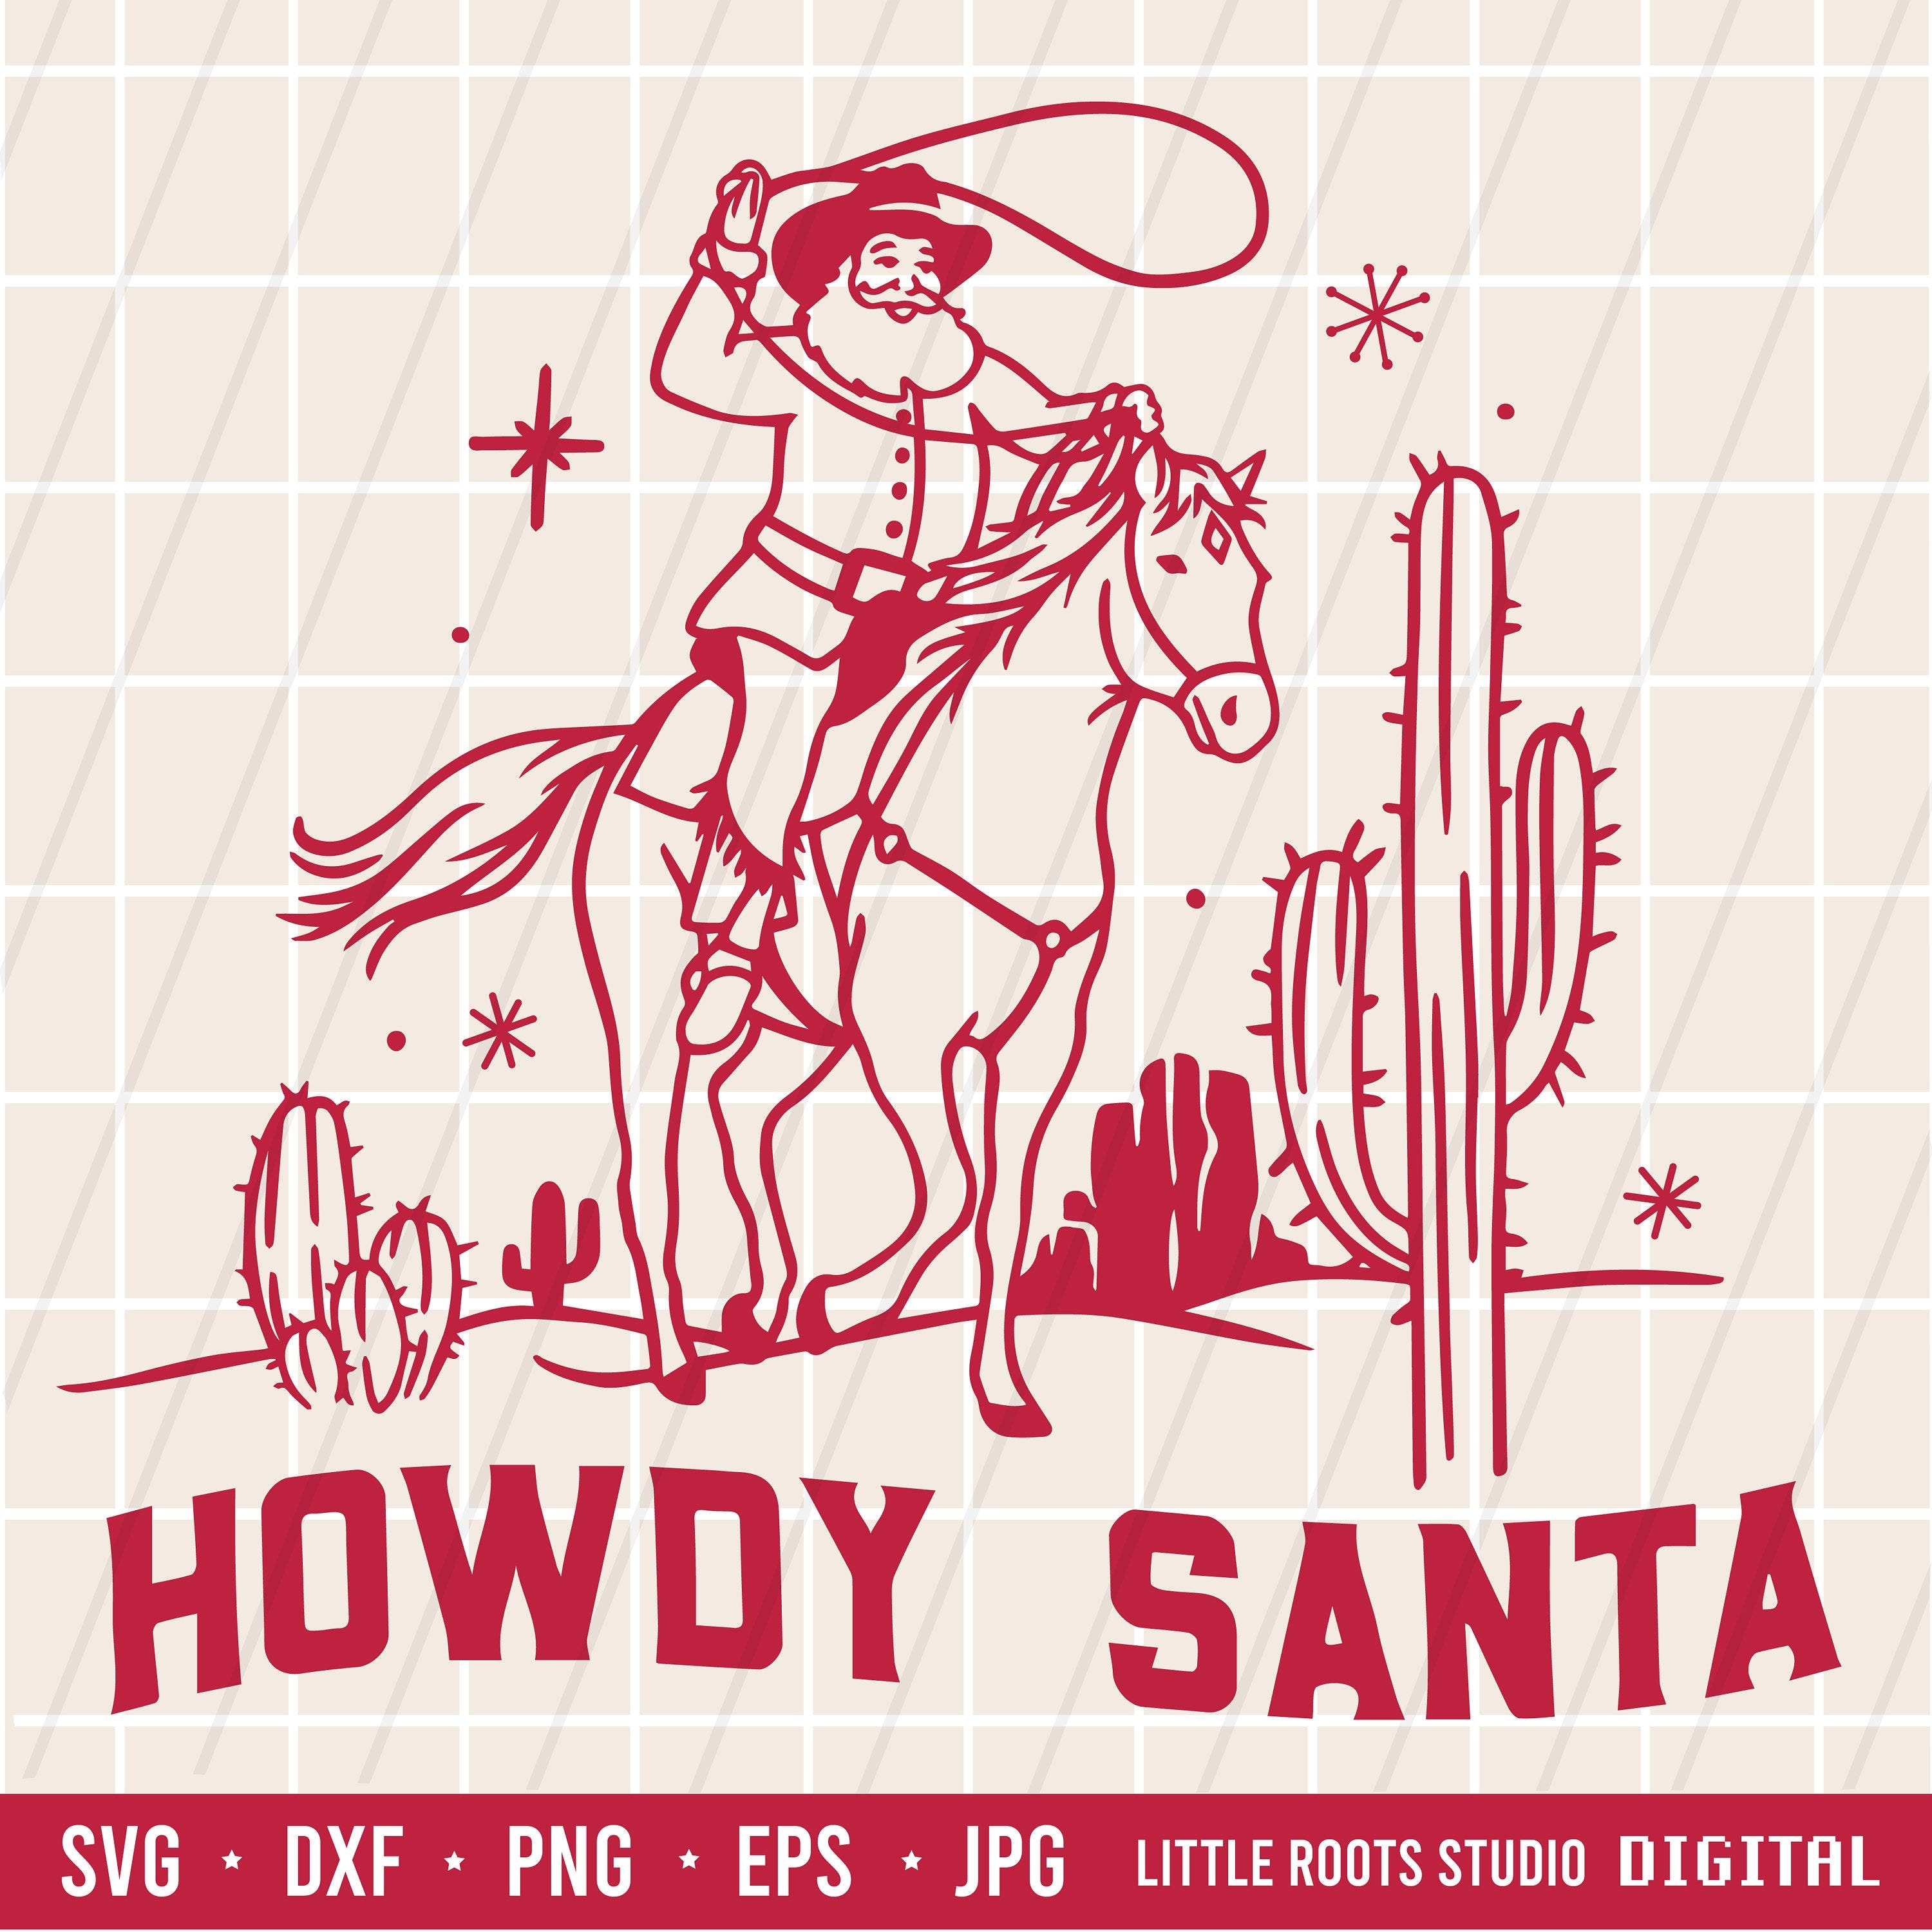 Cowboy Santa / Santa Svg / Western Svg / Cowboy Svg / Christmas Tshirt / Howdy Santa svg / Retro Santa Svg / Santa Claus Svg / Cactus Desert